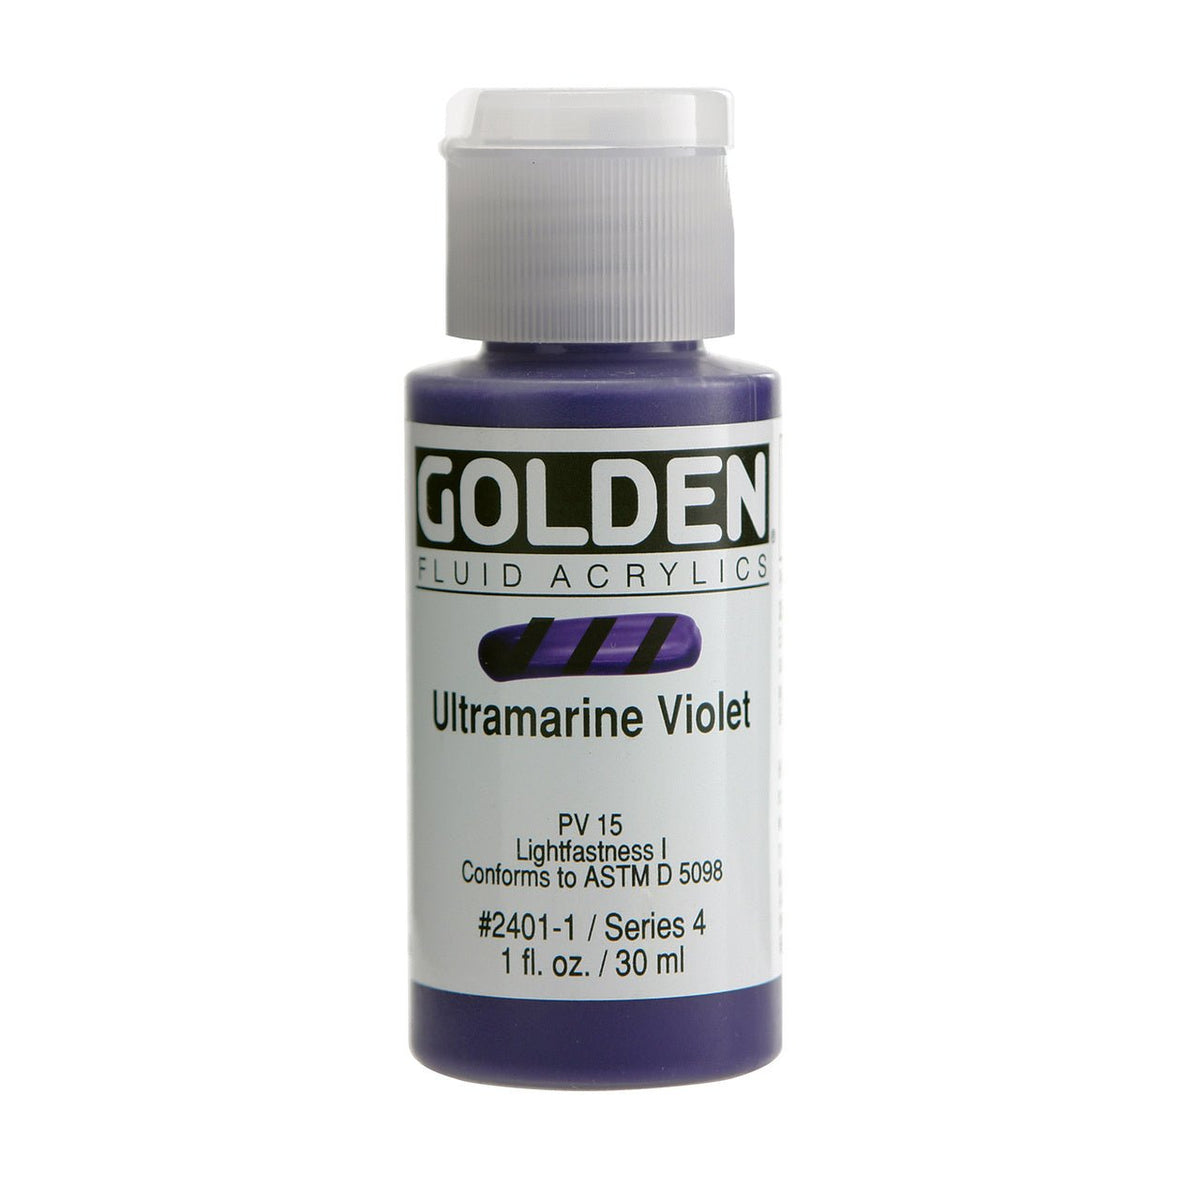 Golden Fluid Acrylic Ultramarine Violet 1 oz - merriartist.com